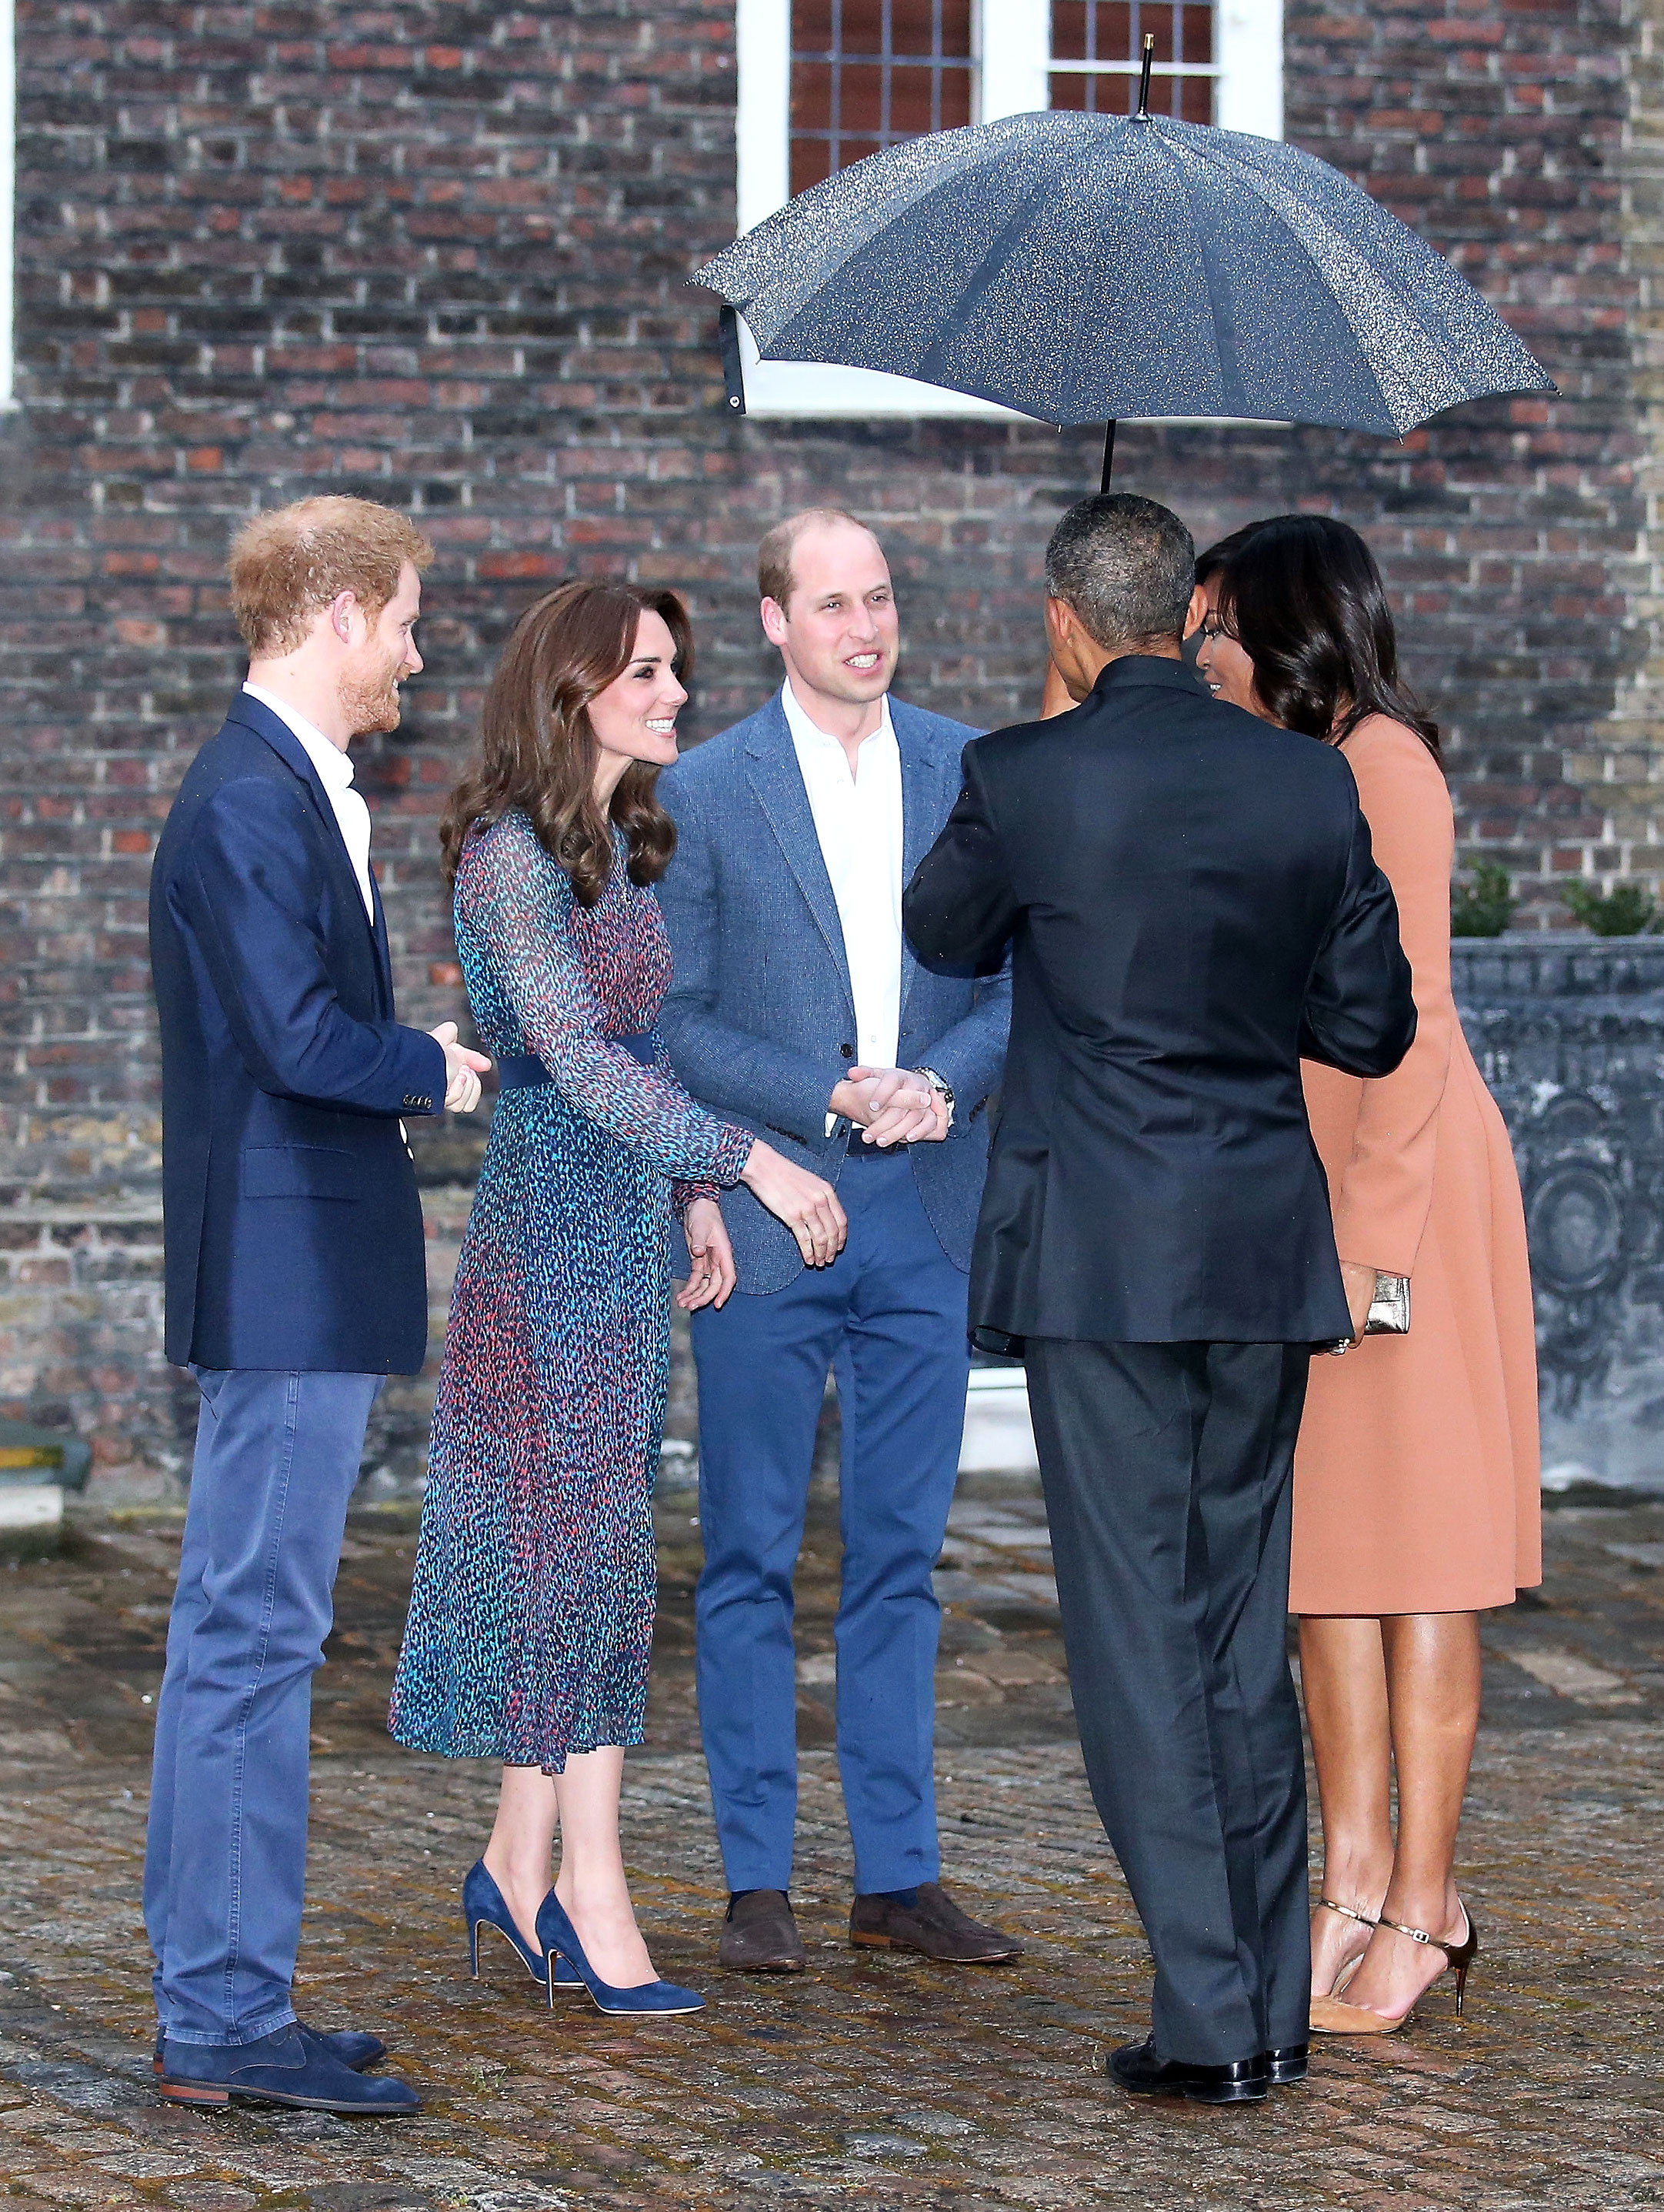 Kate Middleton's Jewel-Toned Dress for Obamas Meeting: Pics